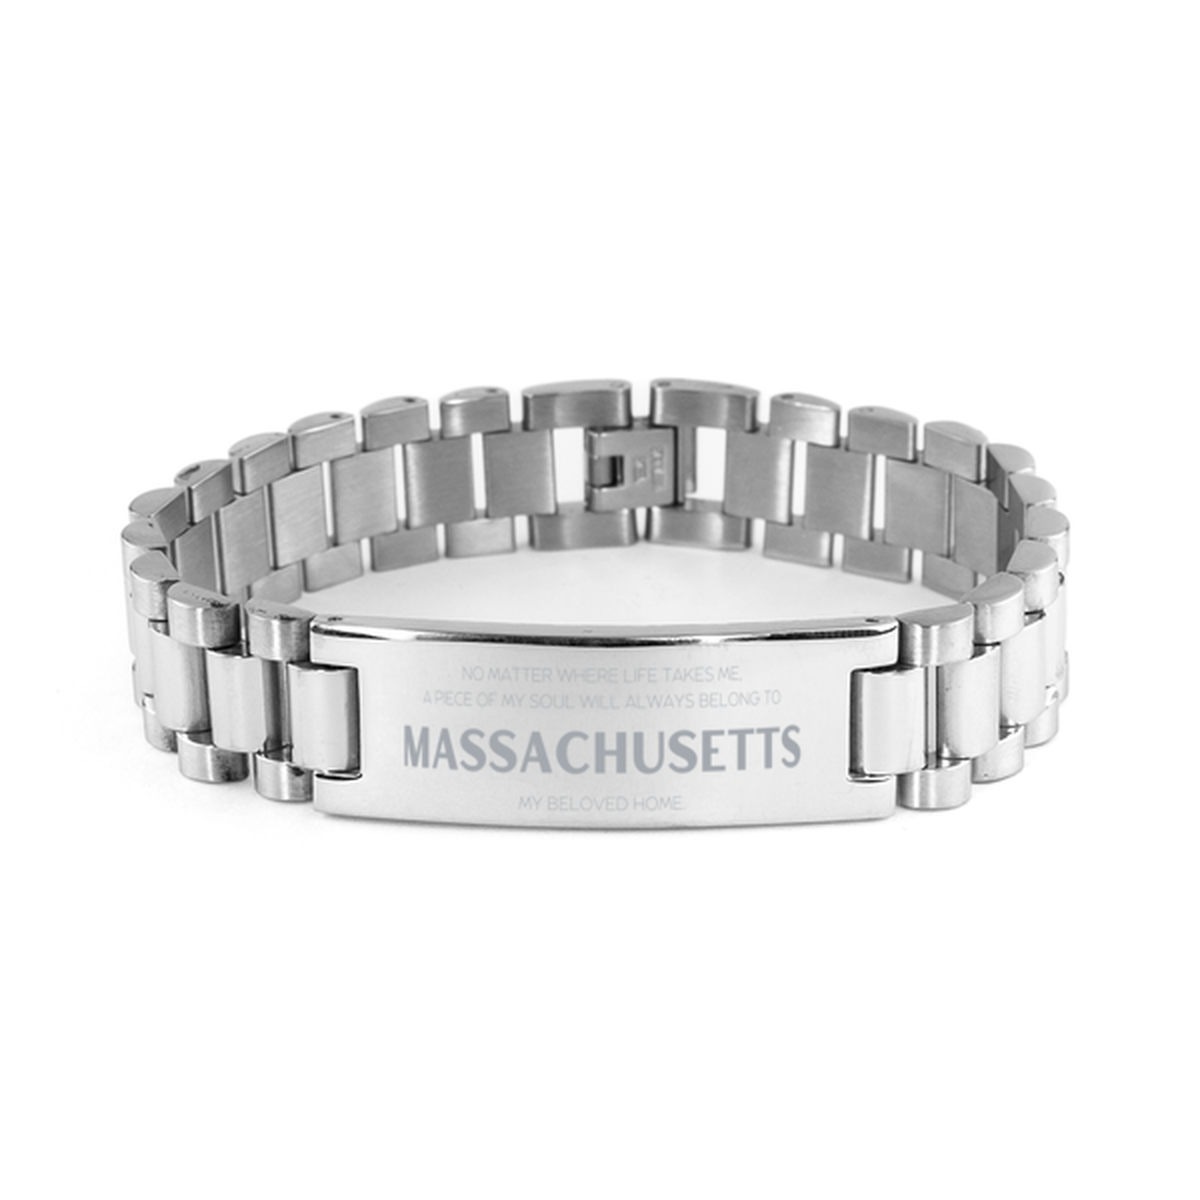 Love Massachusetts State Gifts, My soul will always belong to Massachusetts, Proud Ladder Stainless Steel Bracelet, Birthday Unique Gifts For Massachusetts Men, Women, Friends